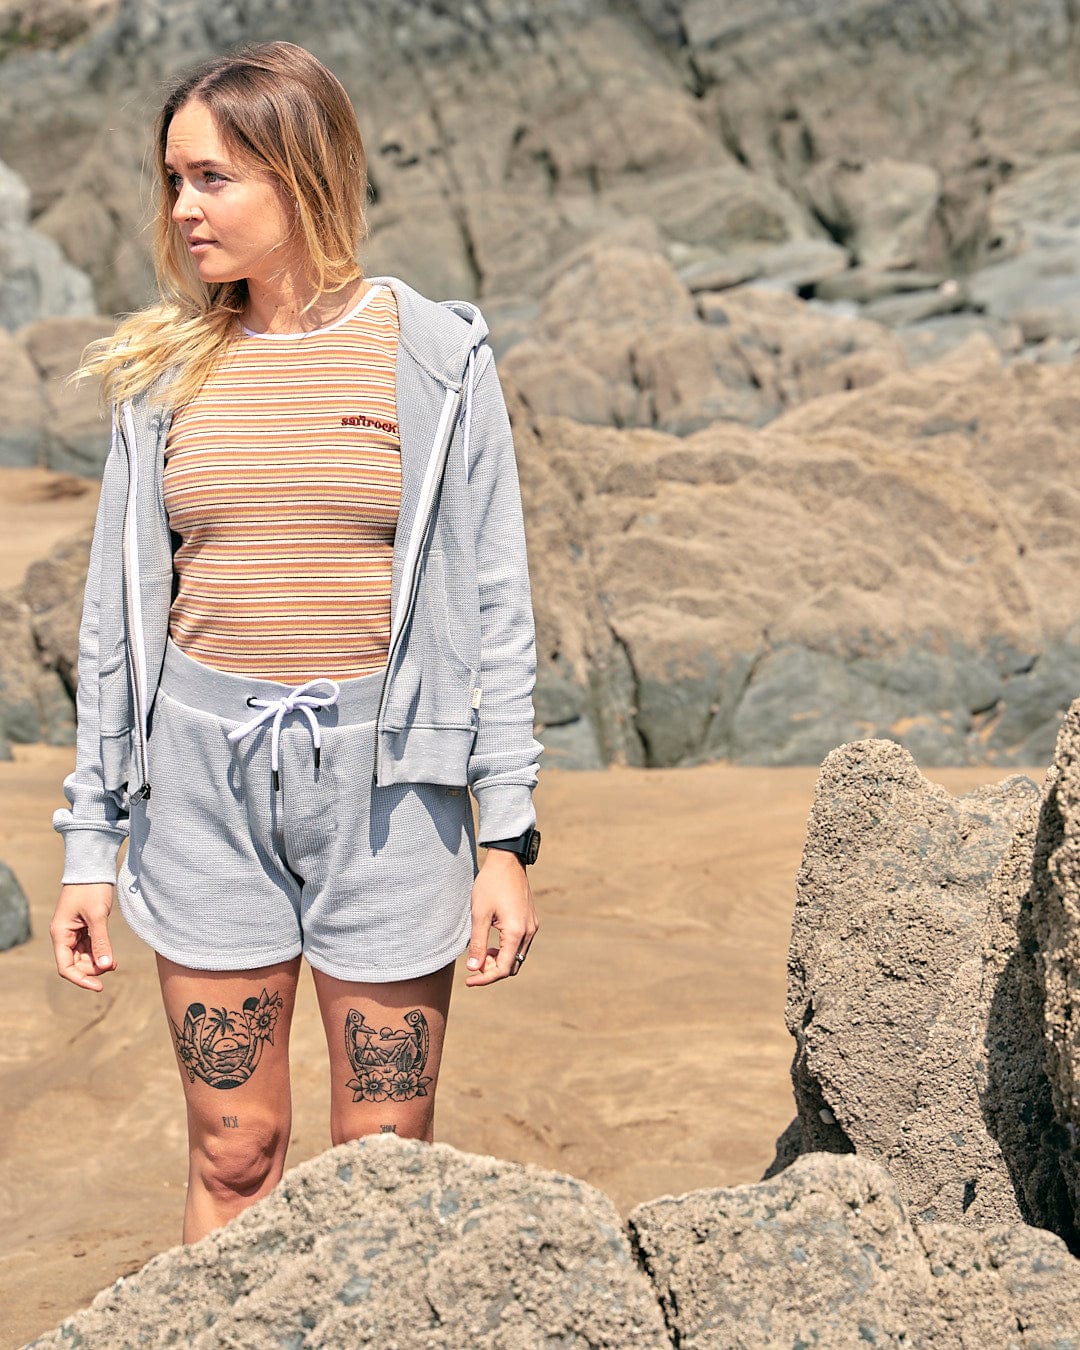 A woman with tattoos standing on a rocky beach wearing the Saltrock Rosalin - Womens Zip Hoodie - Light Grey.